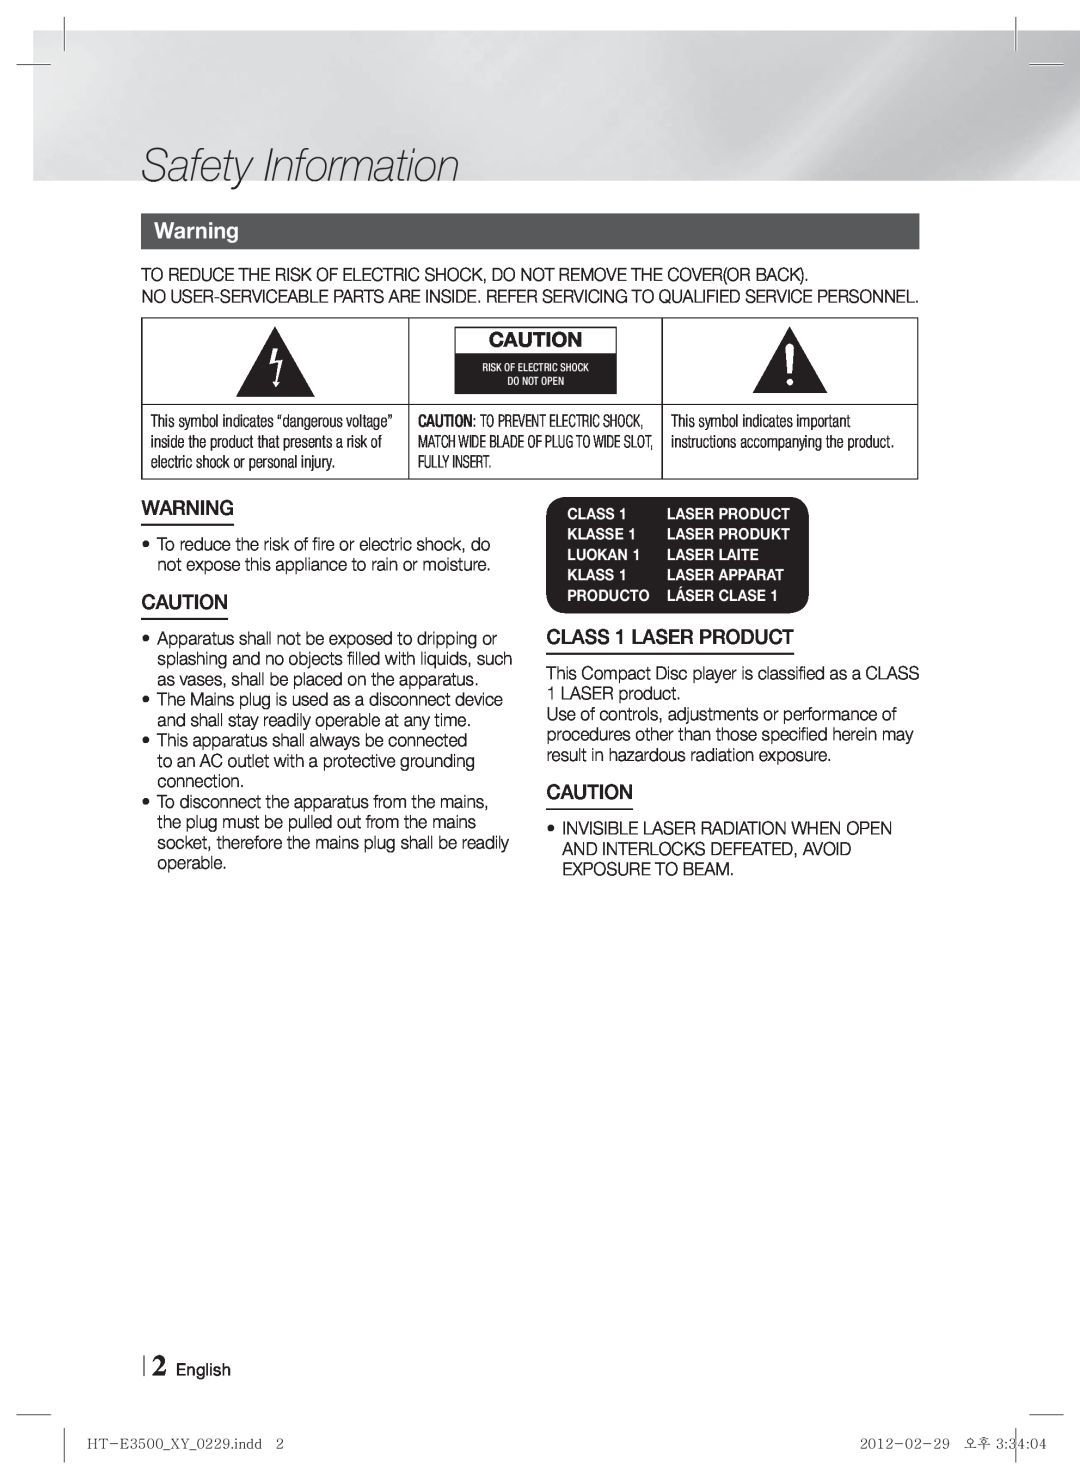 Samsung HT-E3530, E3500, HT-E3550 user manual Safety Information, CLASS 1 LASER PRODUCT 